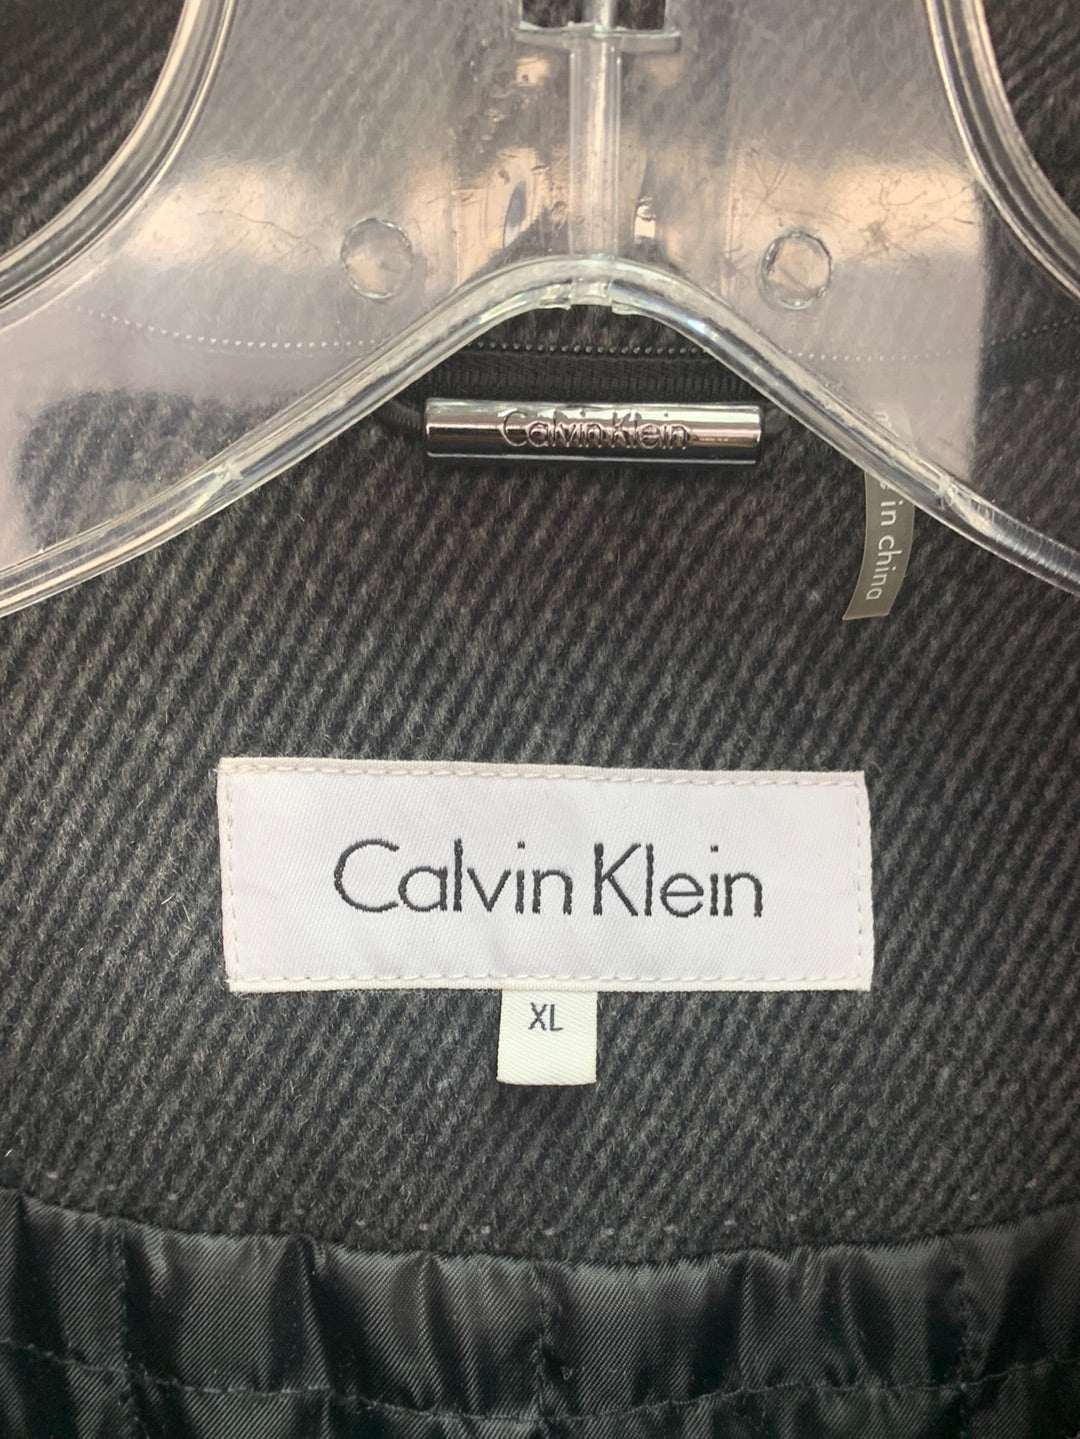 NWT - CALVIN KLEIN grey stripe Wool Blend Full Zip Over Coat Jacket - XL